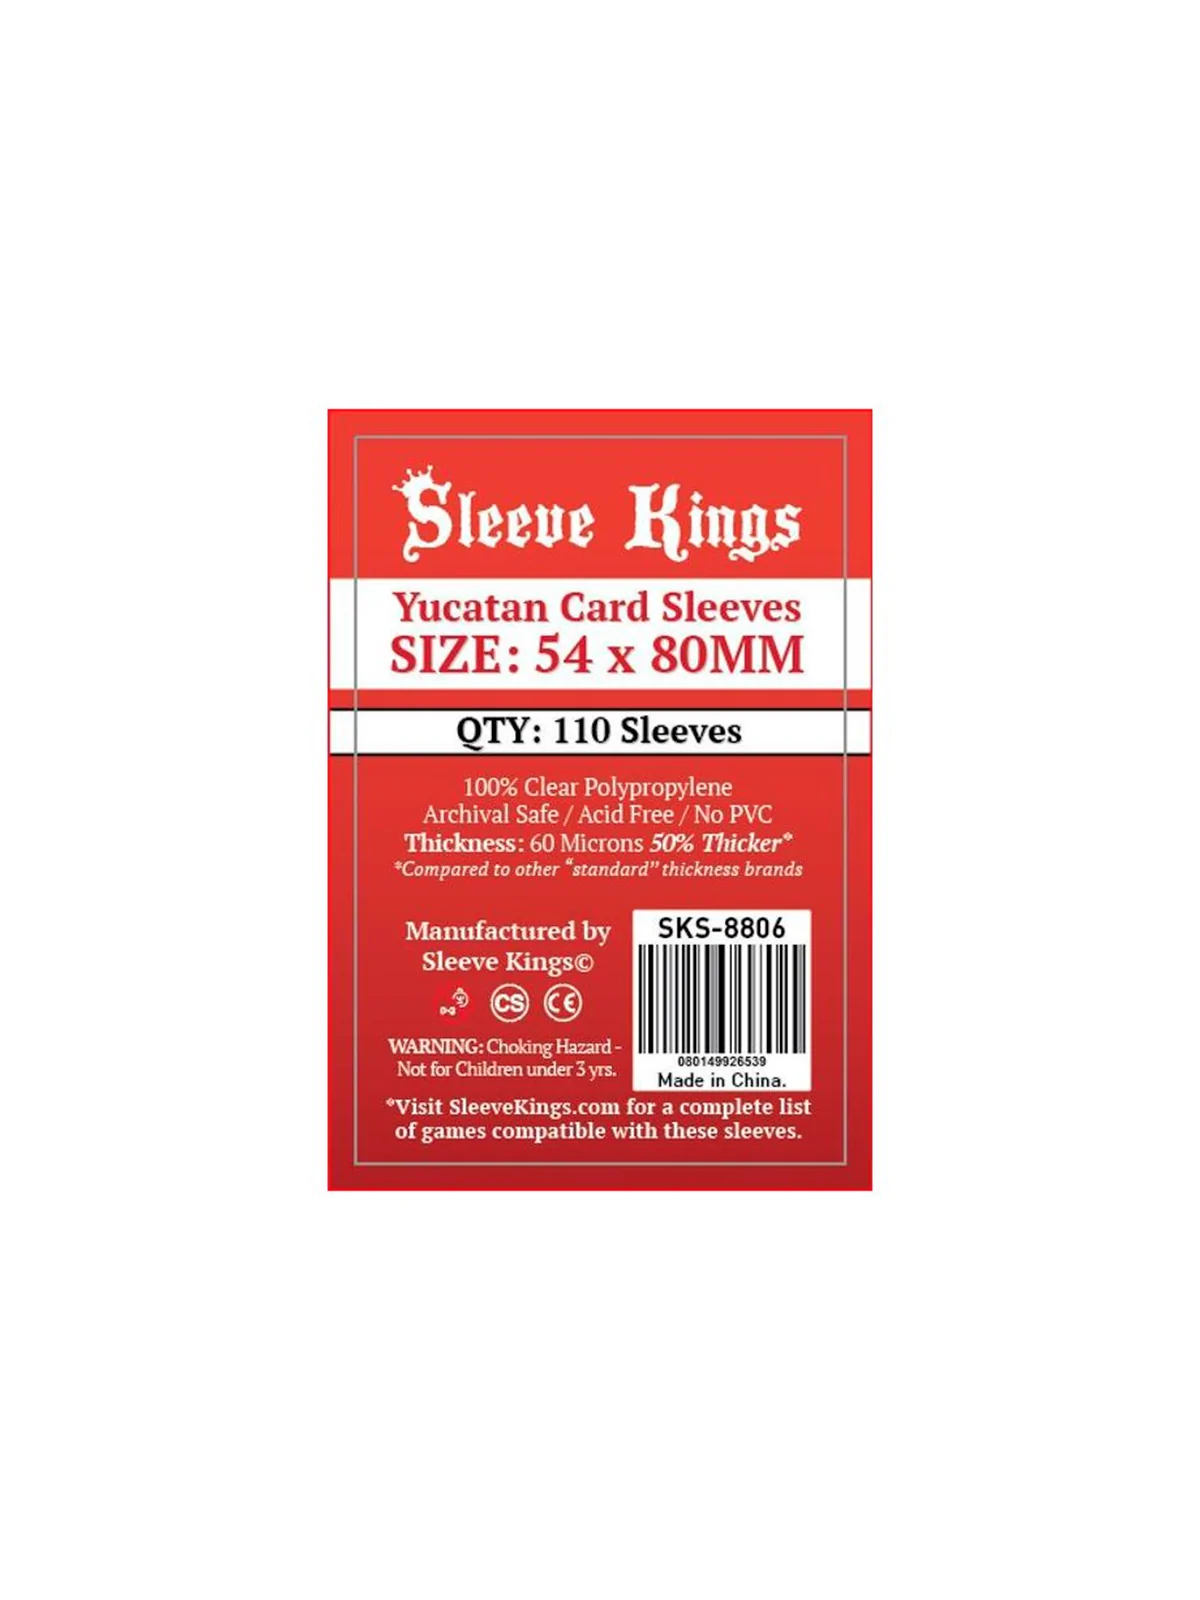 Comprar [8806] Sleeve Kings Yucatan Card Sleeves (54x80mm) barato al m